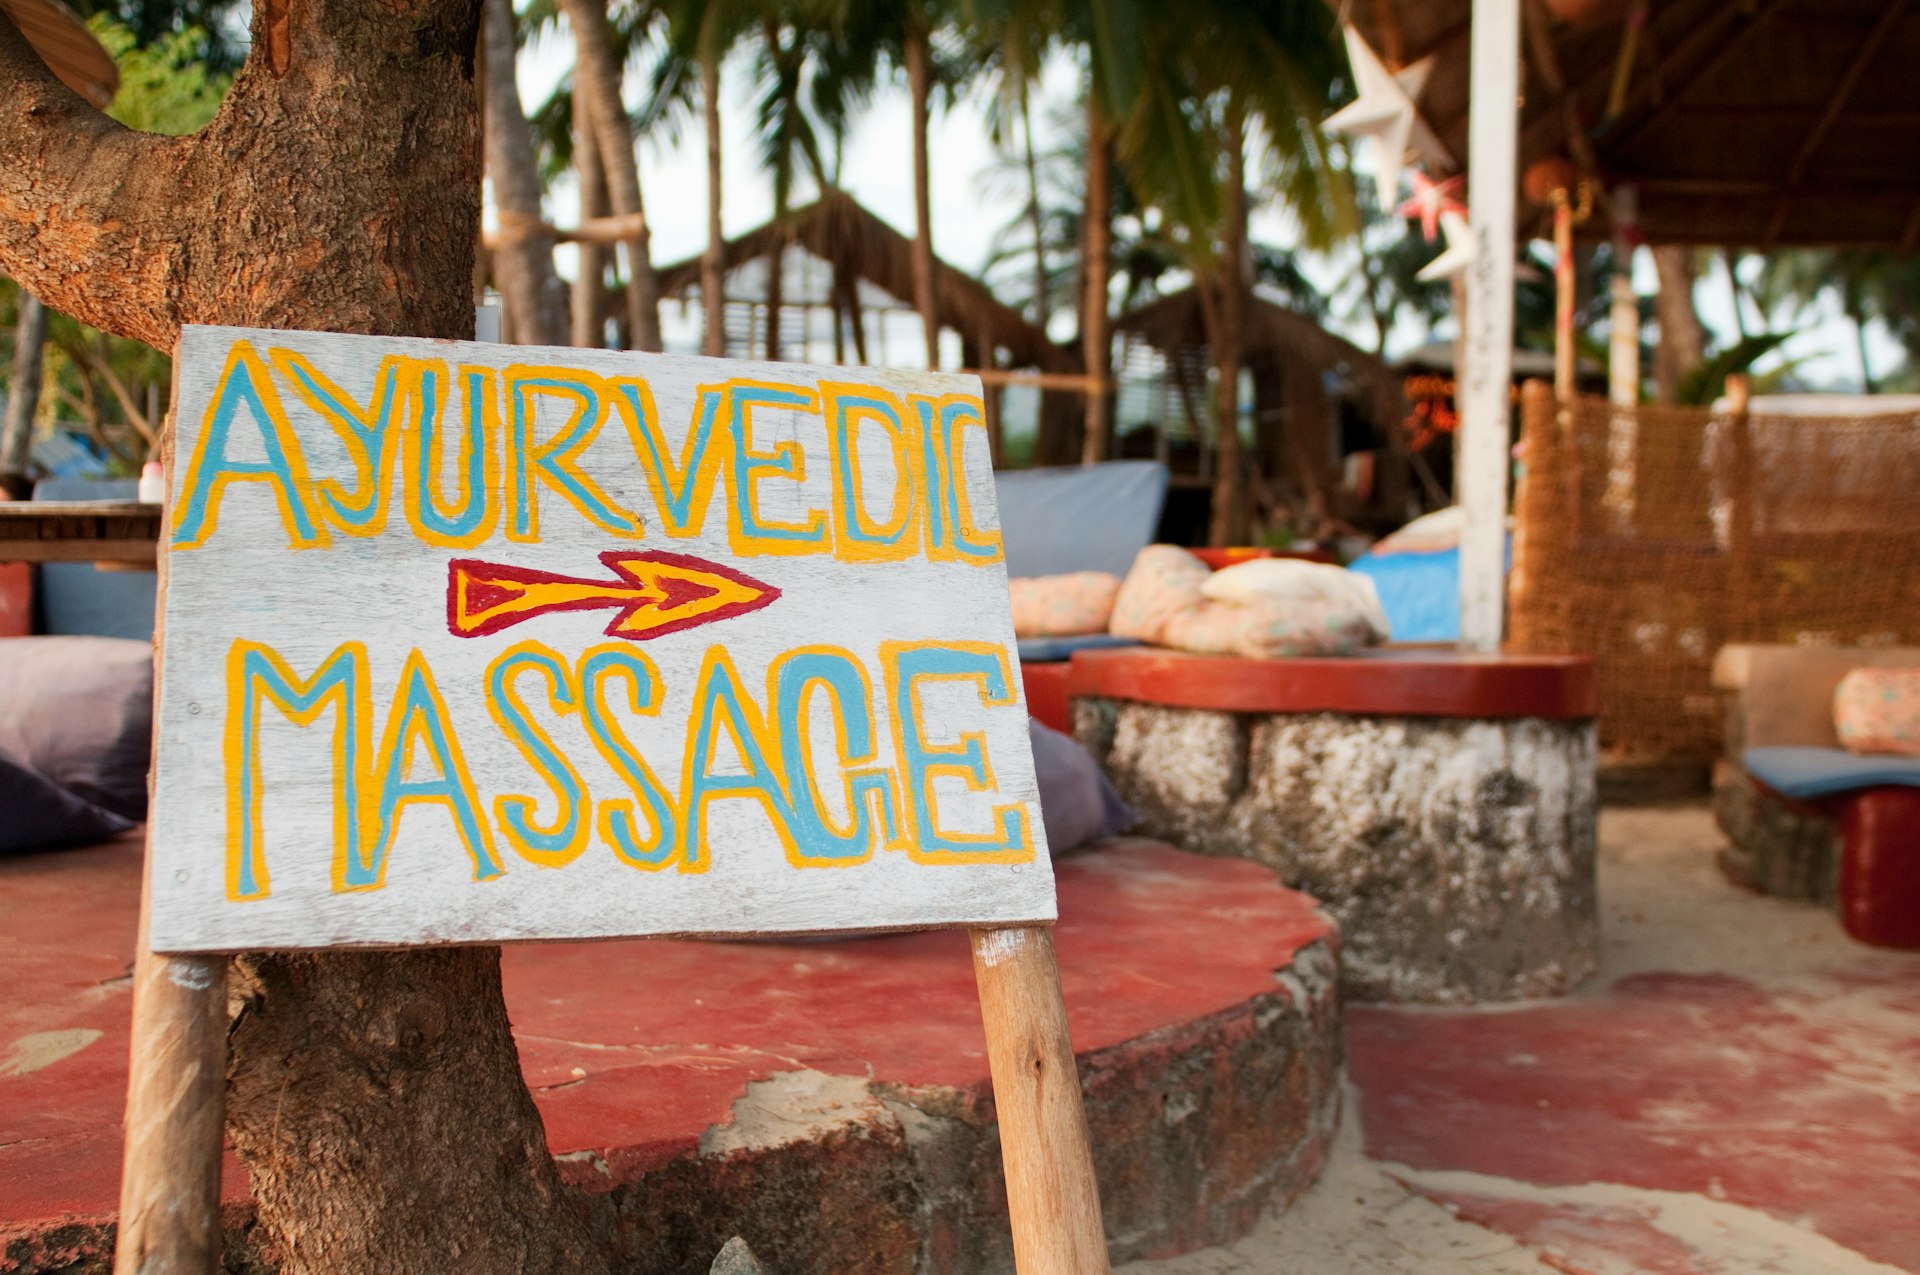 Ayurvedic massage sign, Goa